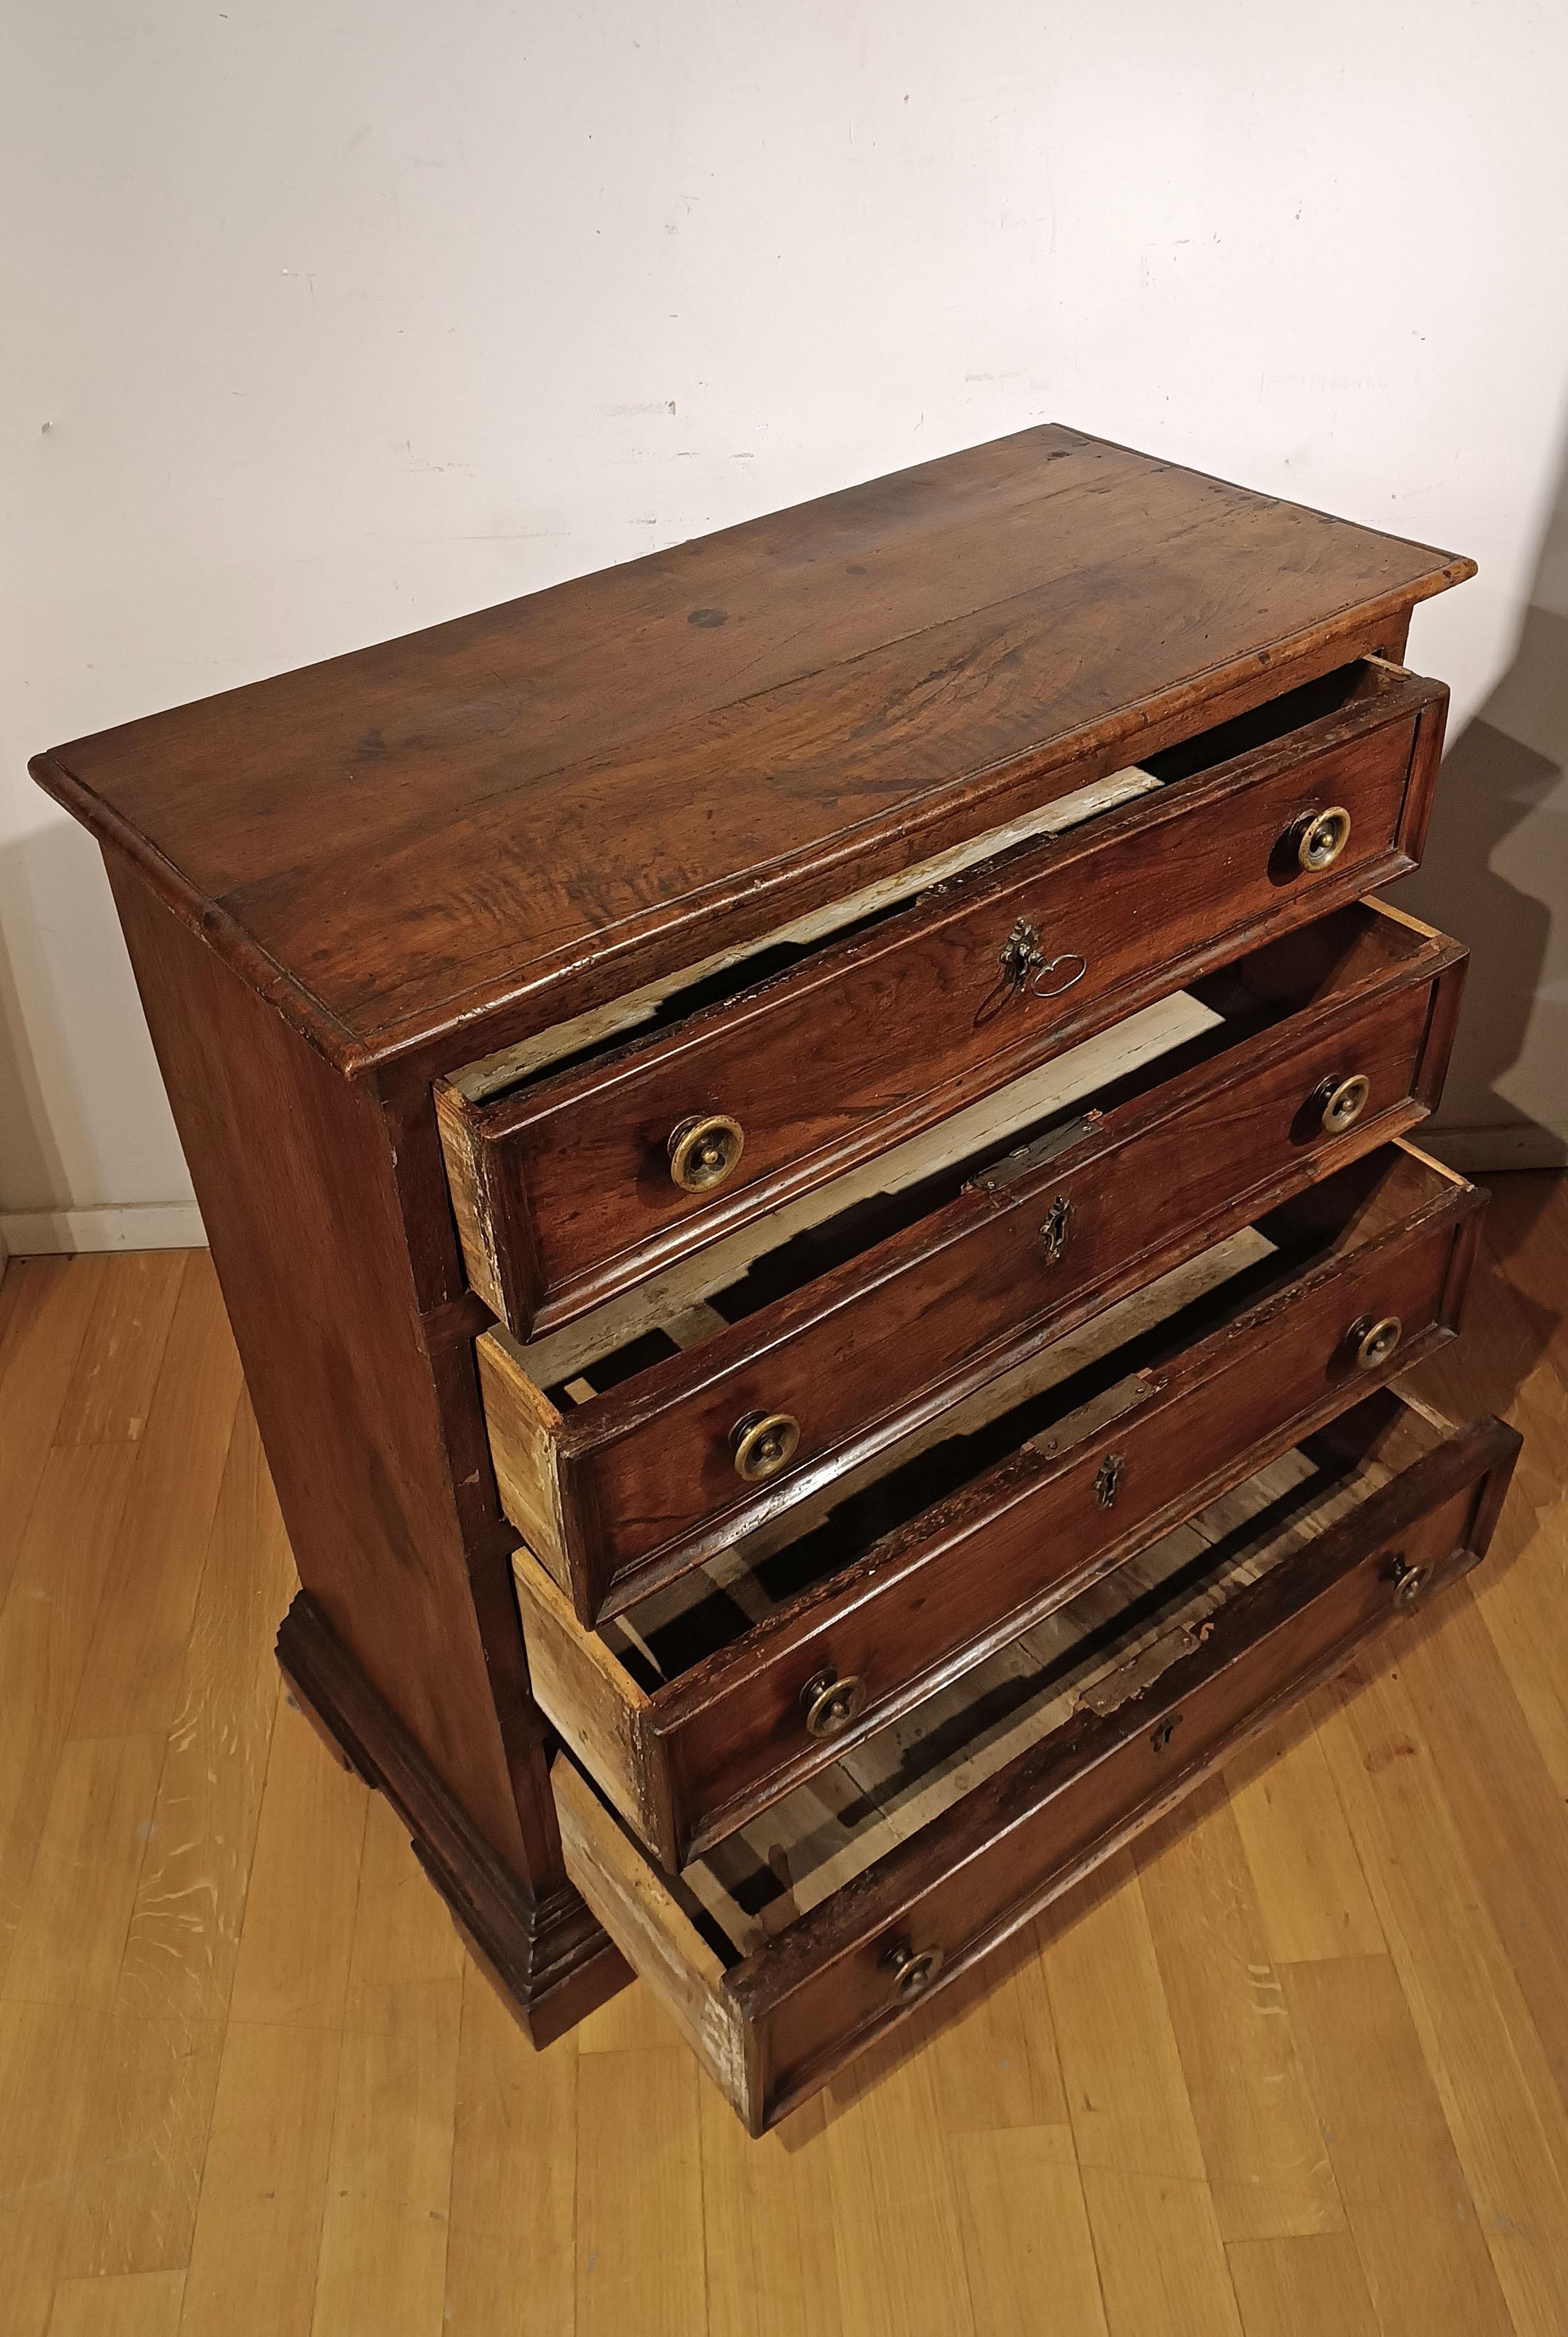 17th century drawer pulls